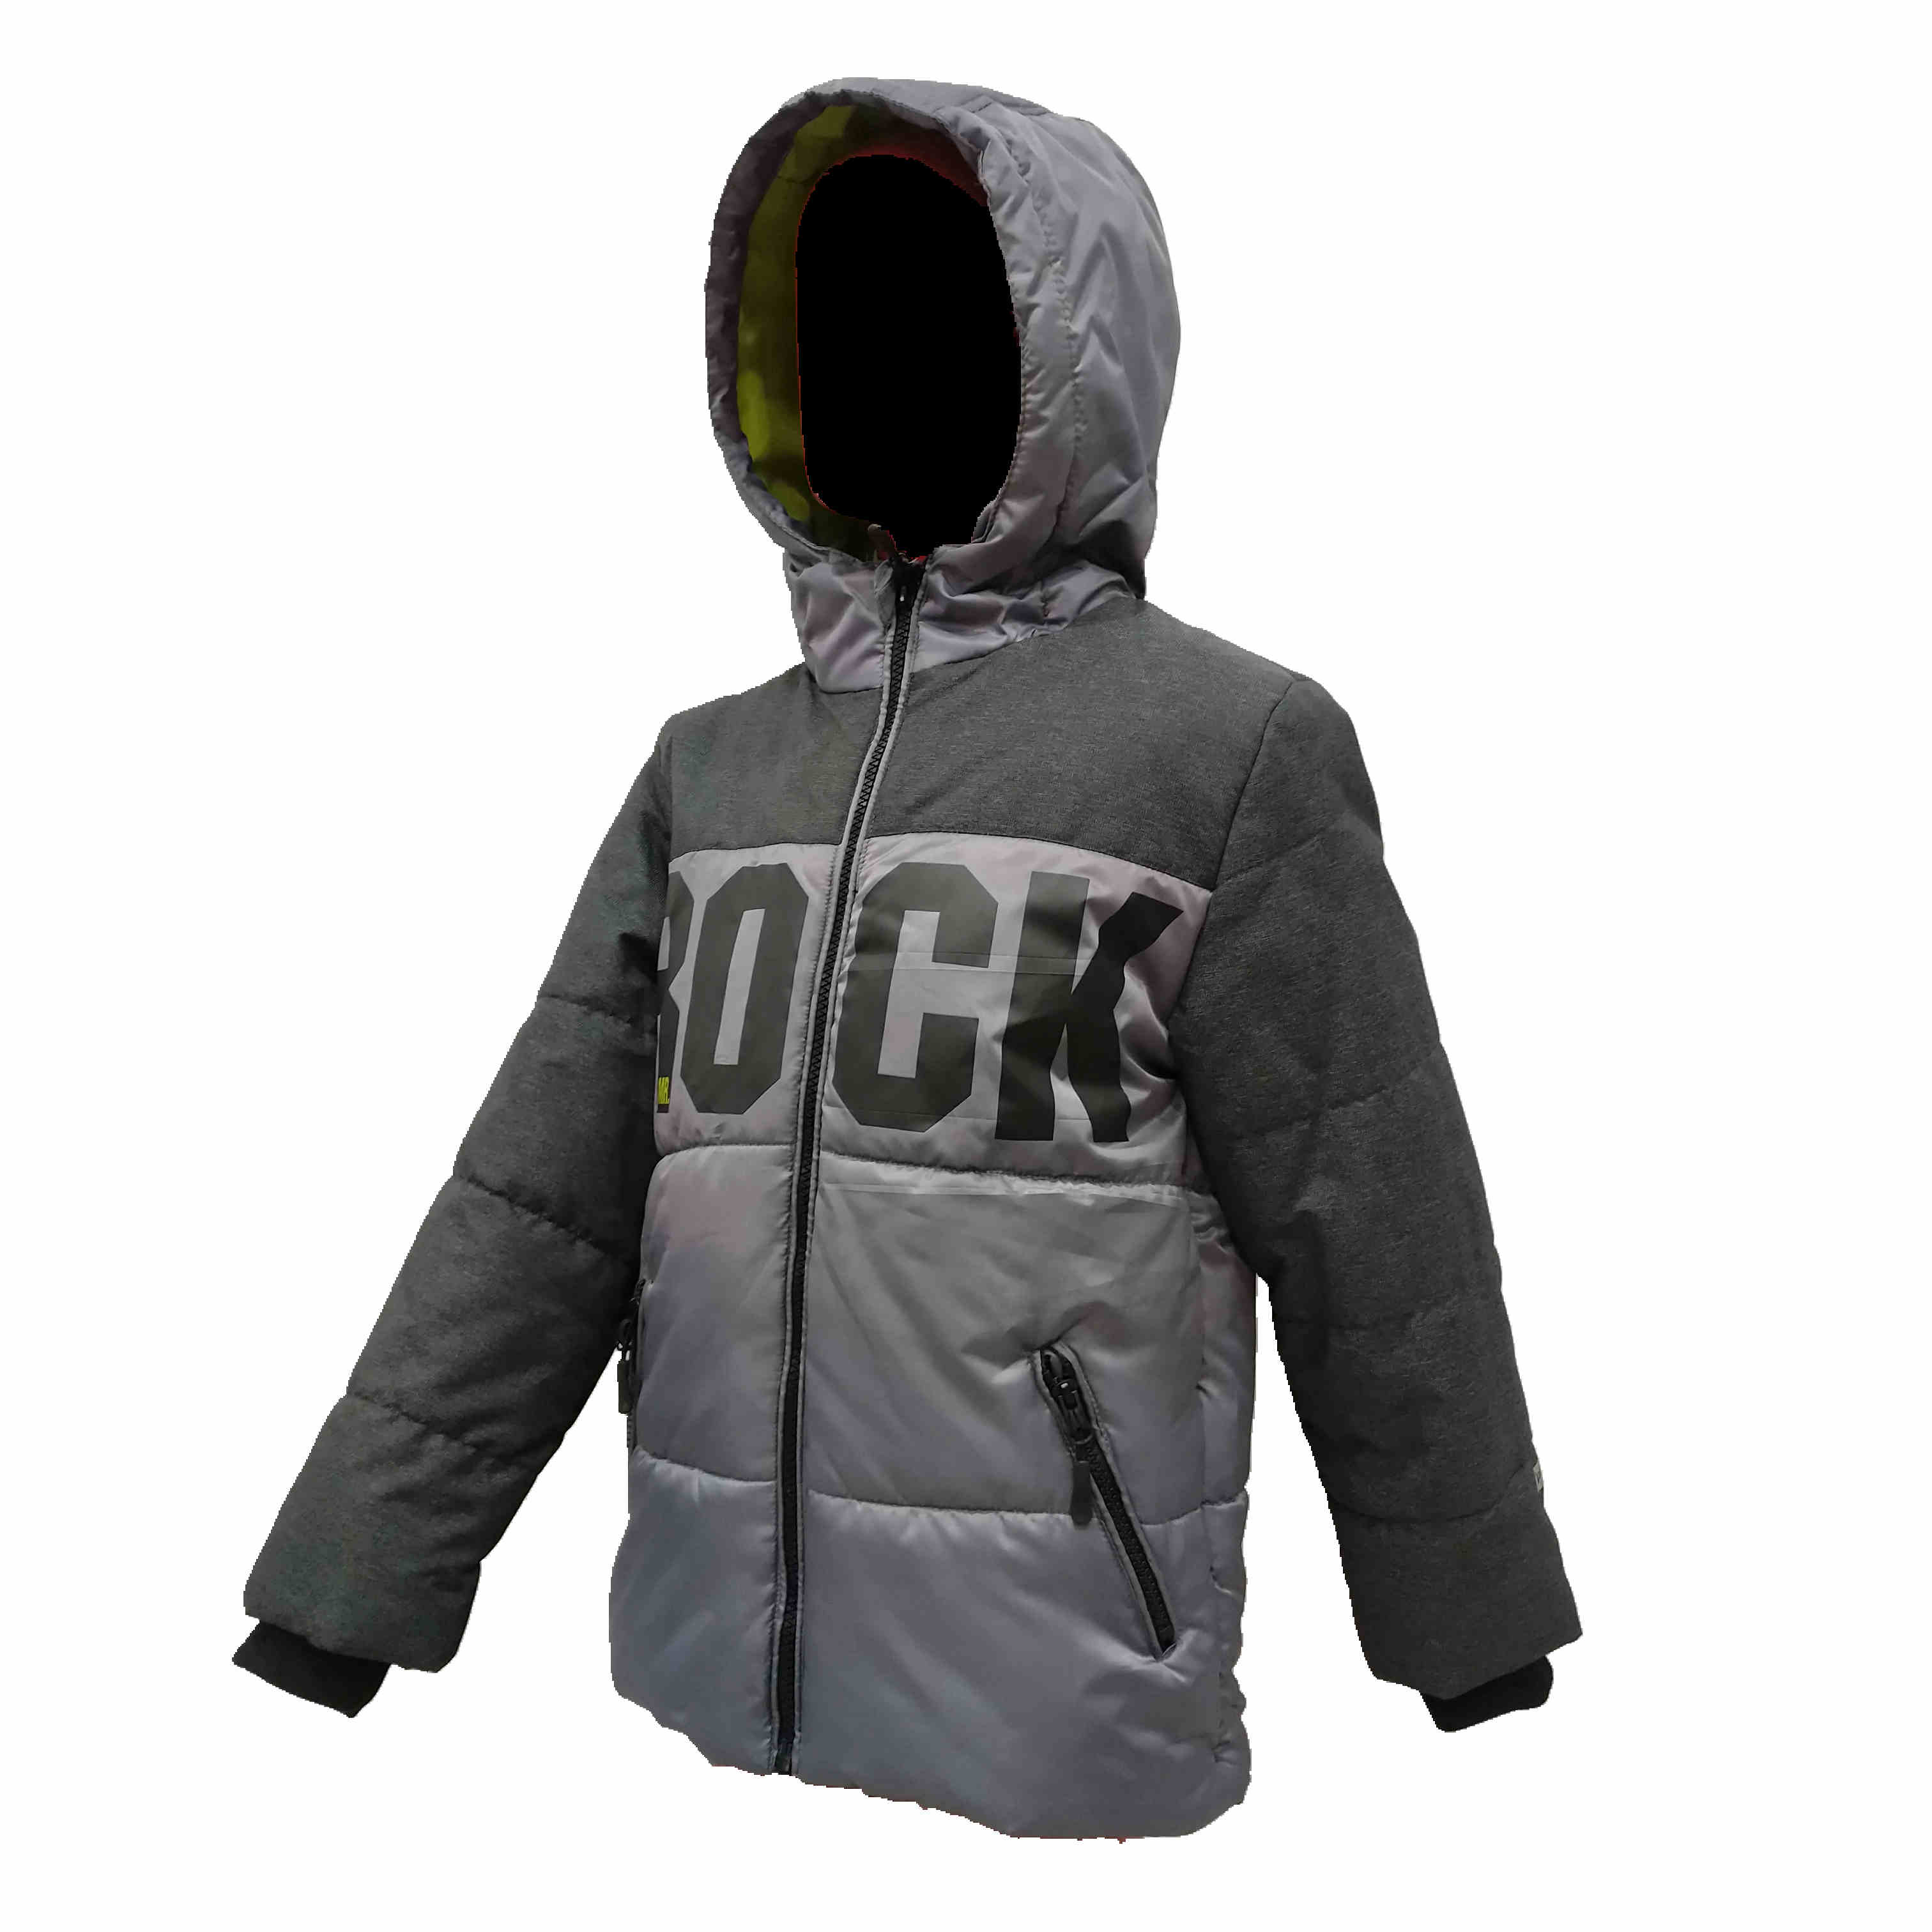 Boy's high quality padded coat waterproof windproof print jacket